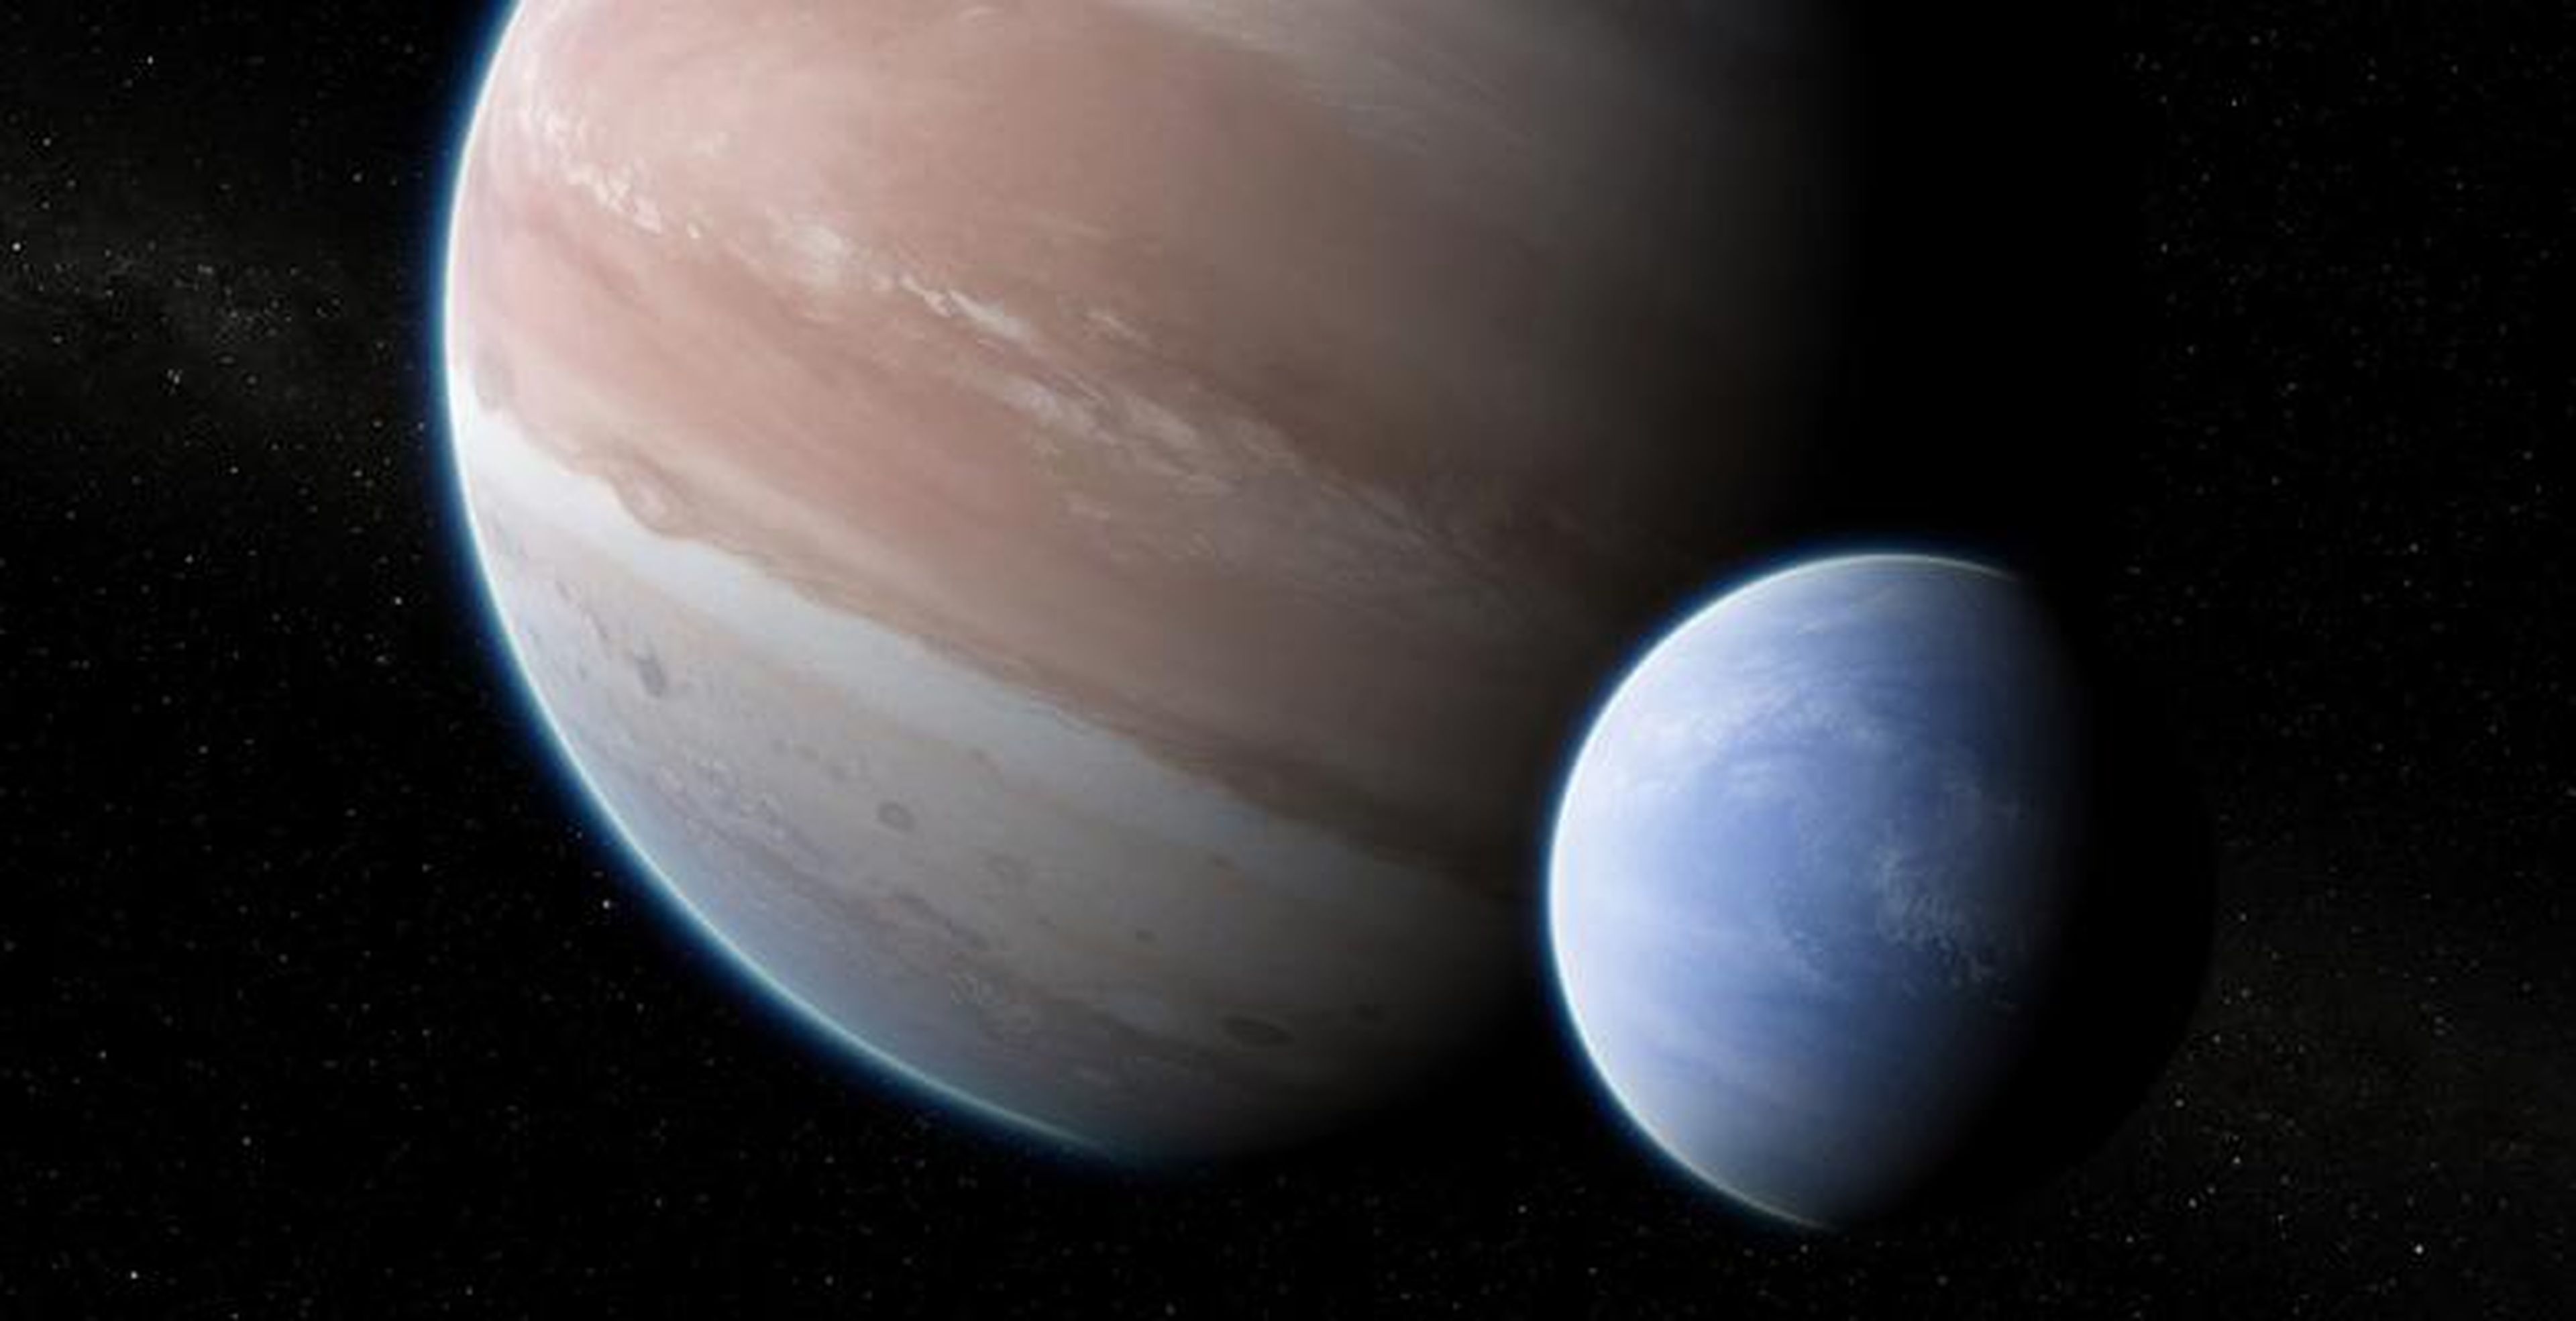 Planeta Kepelr-1625b y su luna